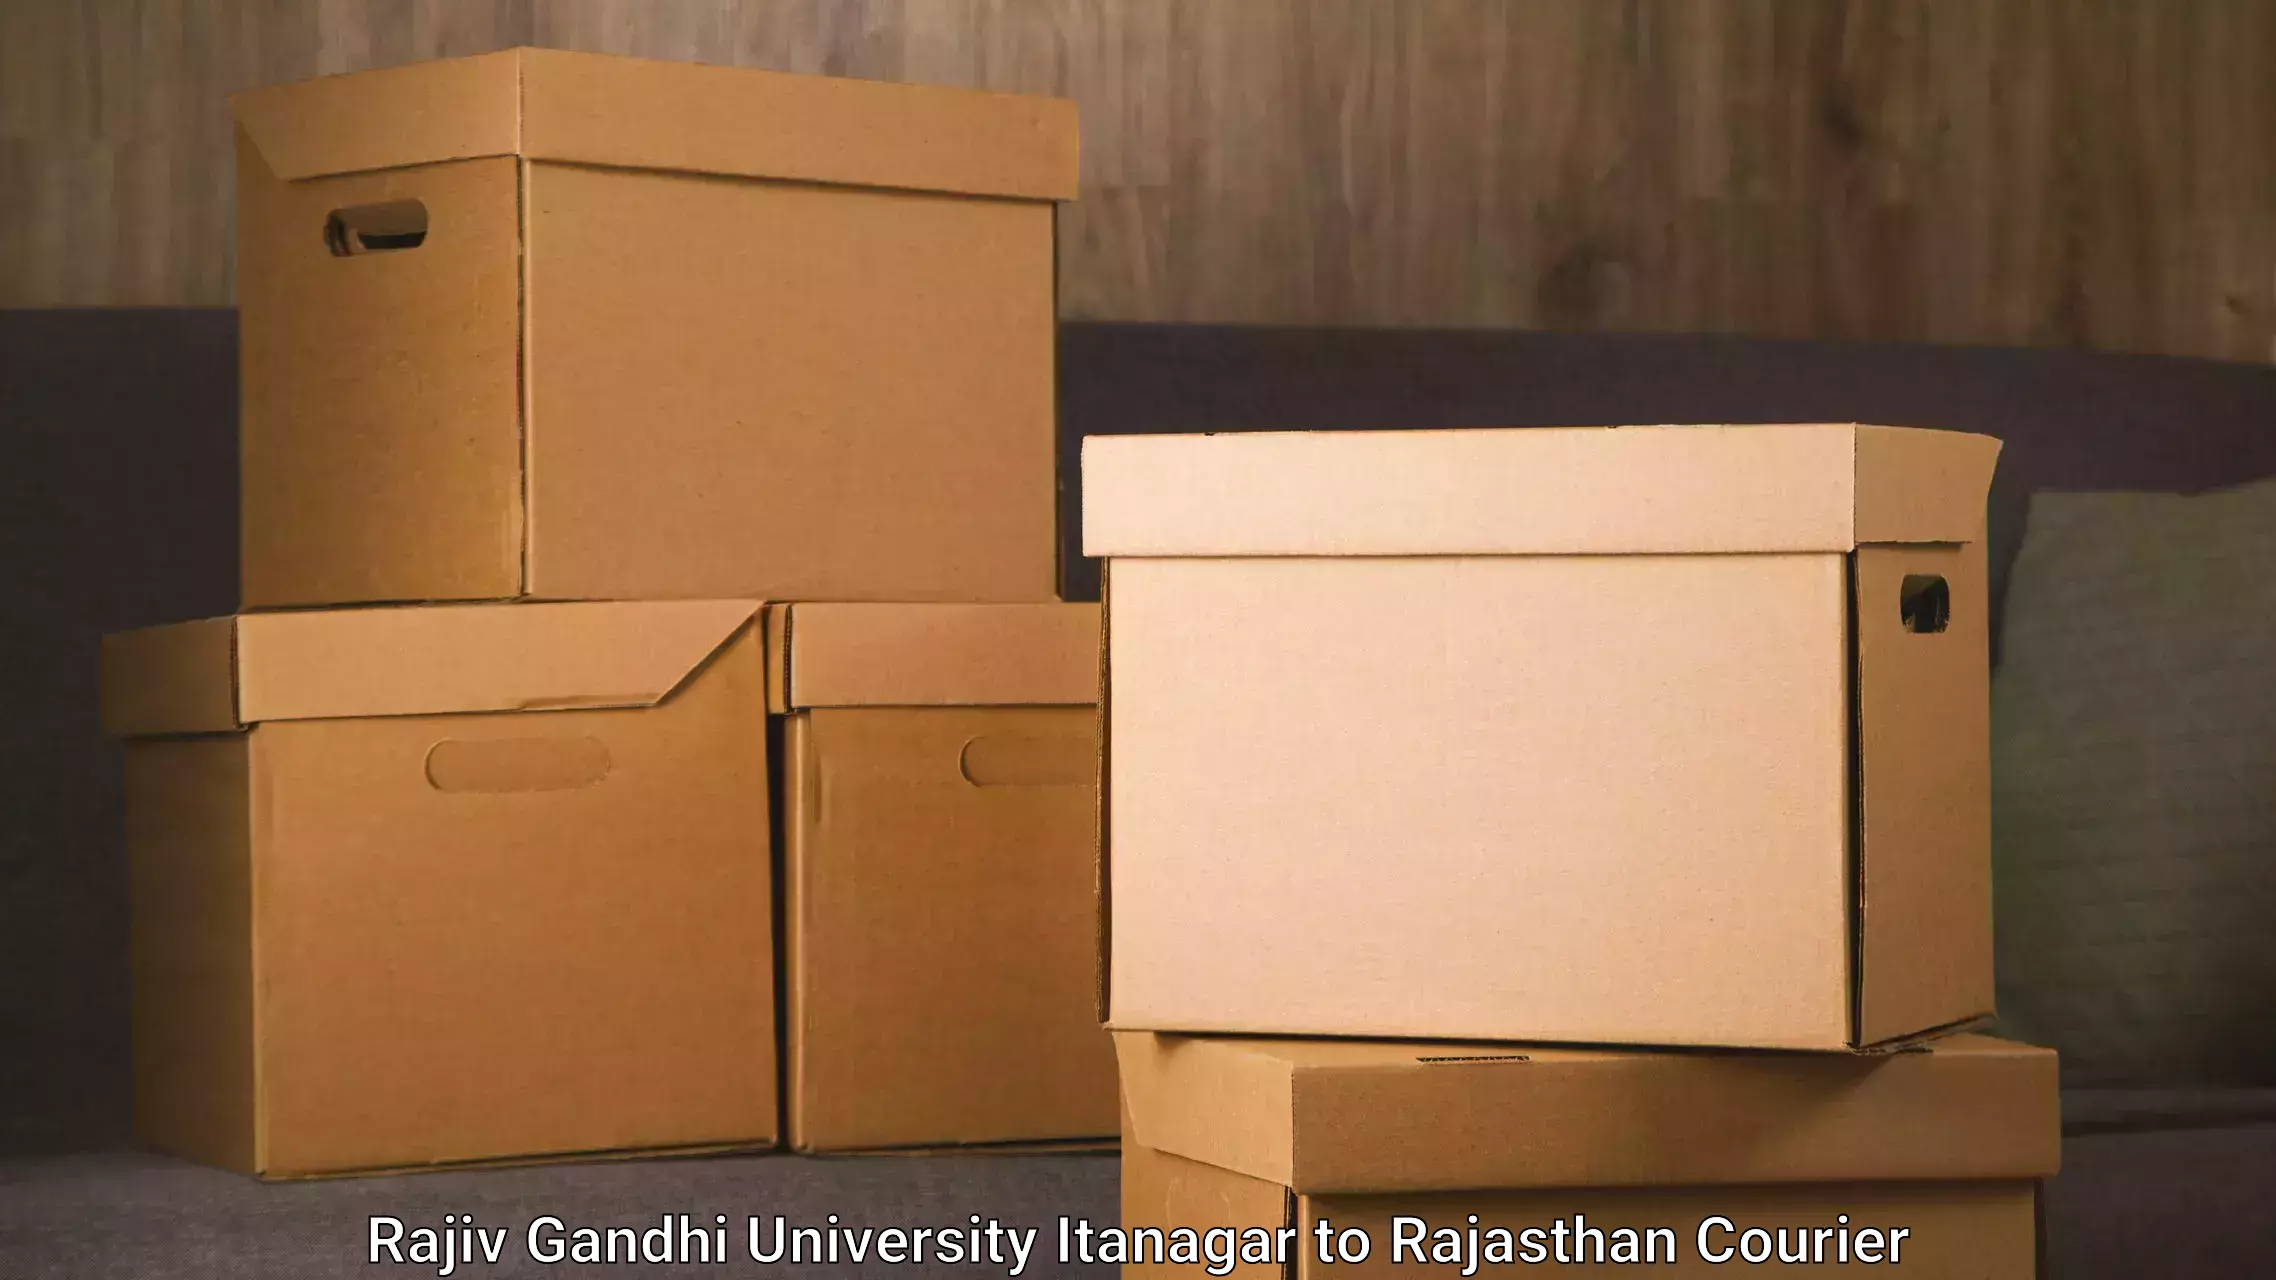 Expedited parcel delivery in Rajiv Gandhi University Itanagar to Neem ka Thana